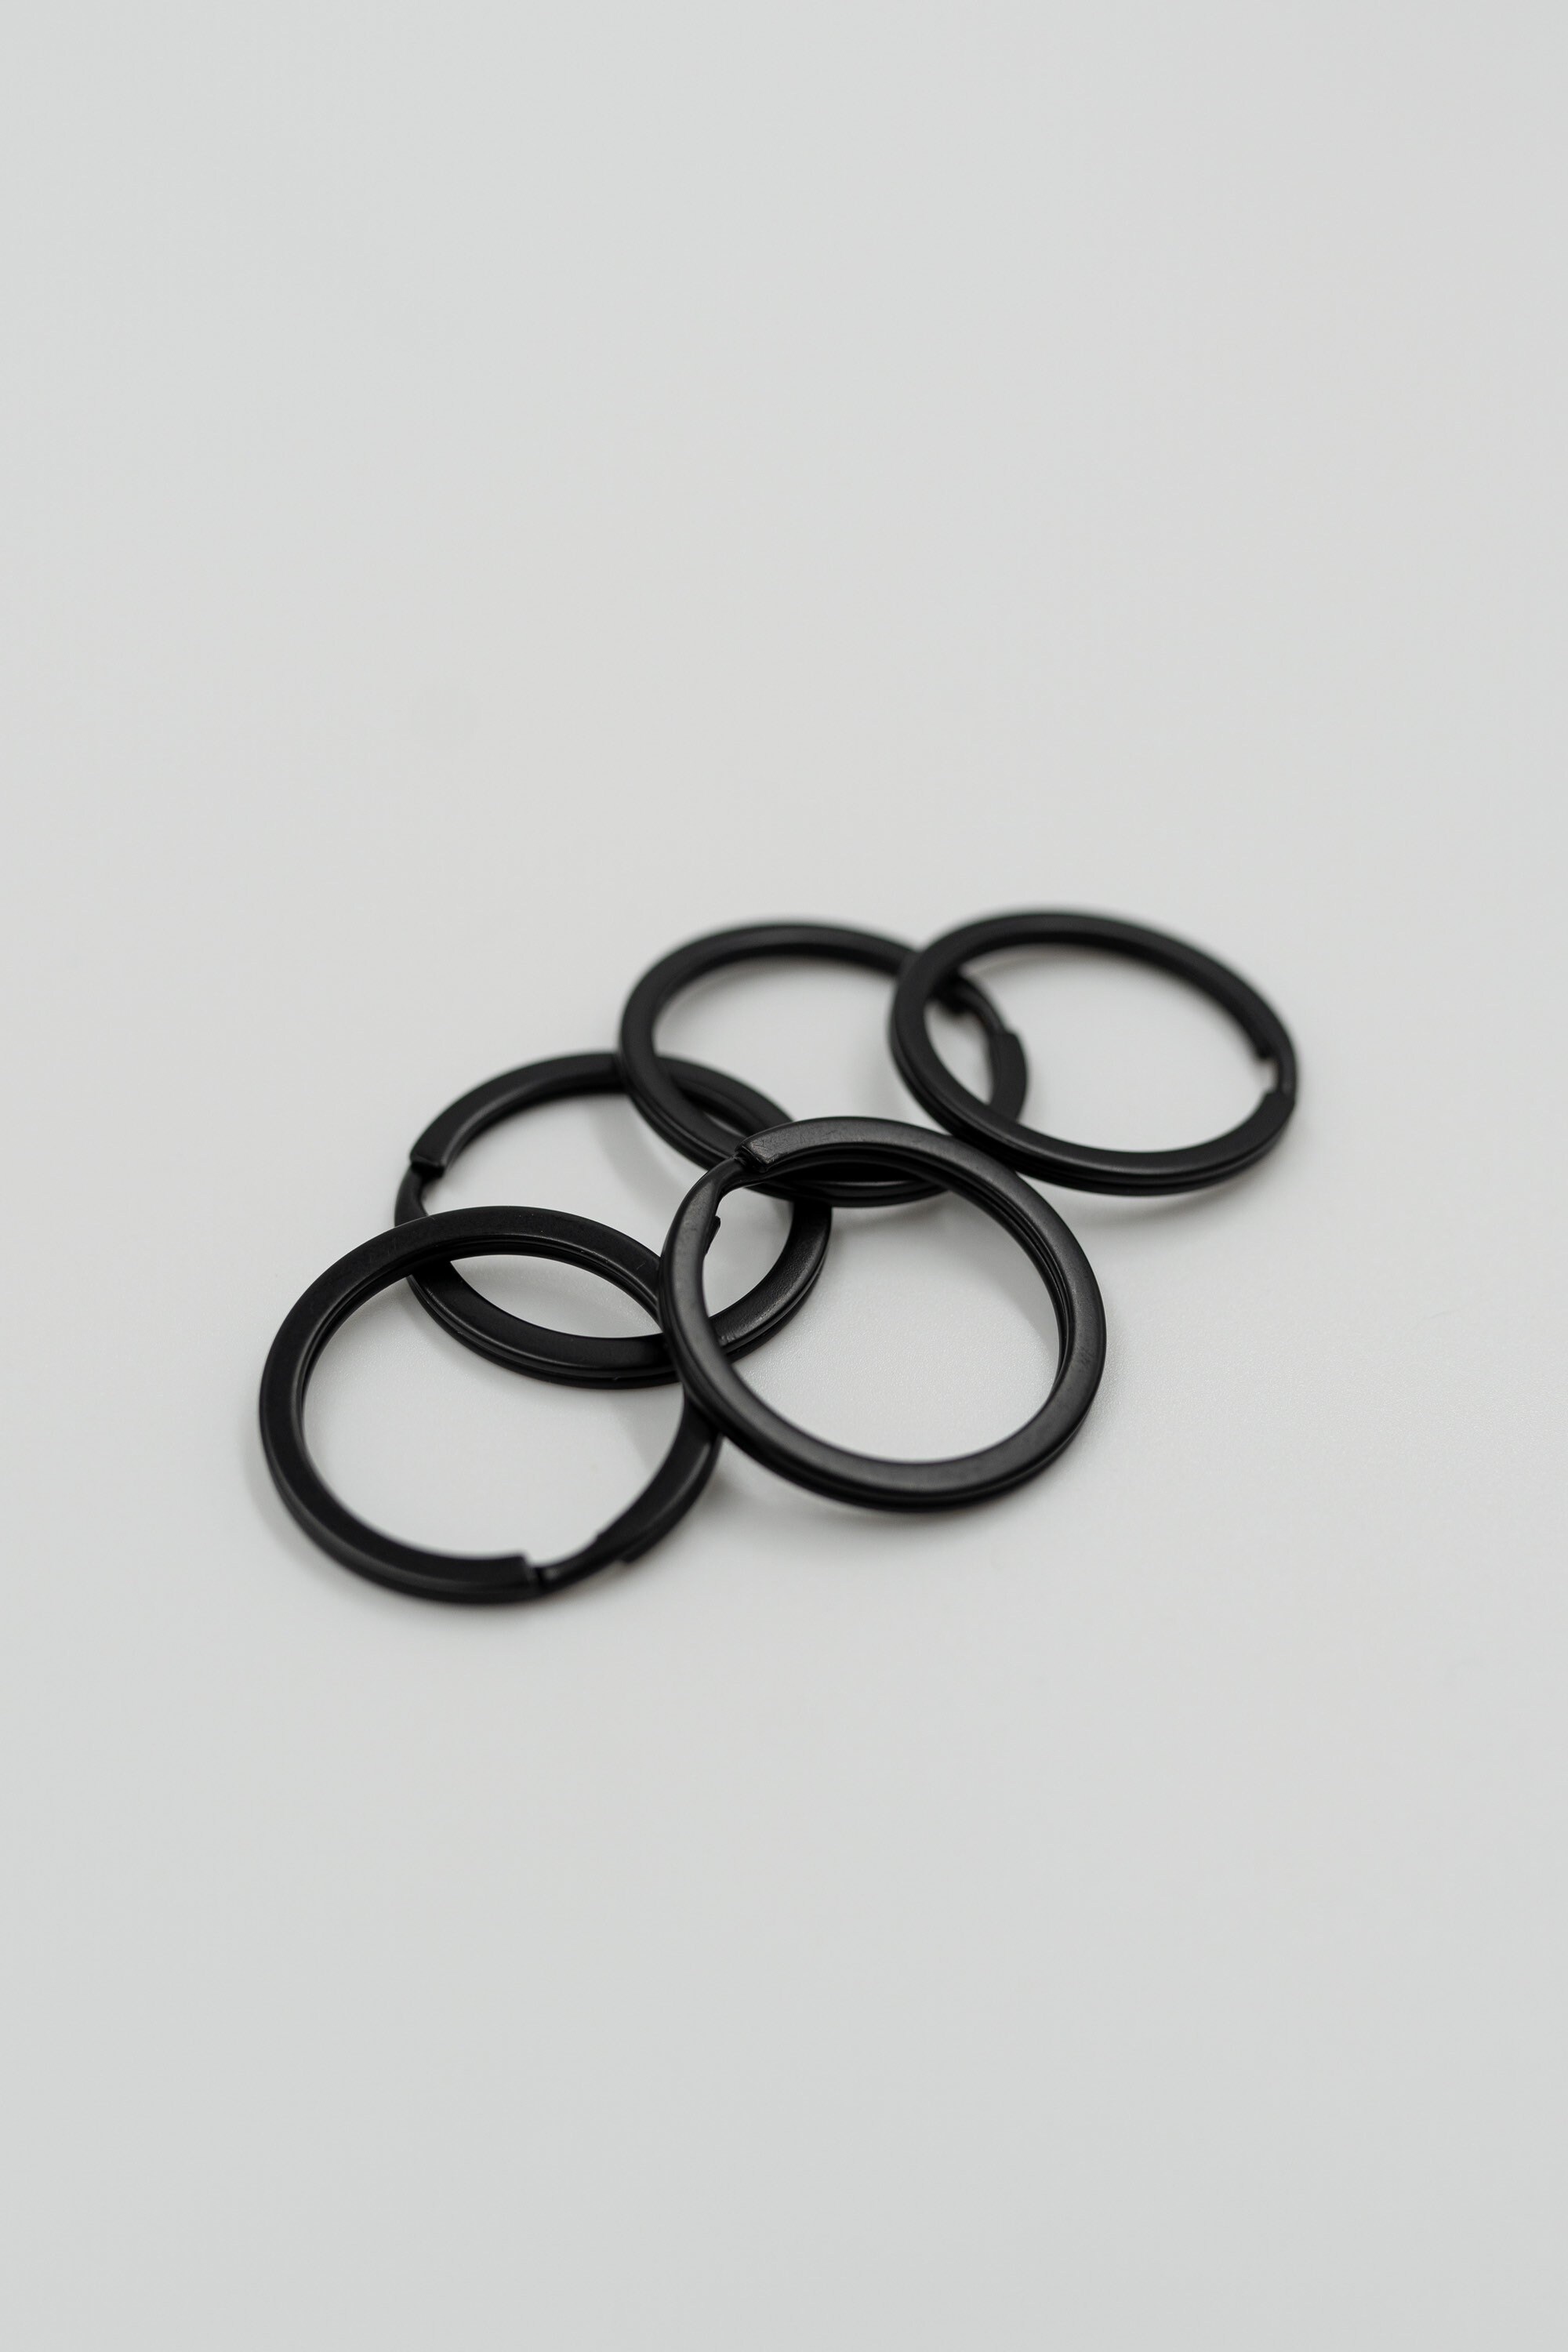 20pcs High Quality Black Flat 28mm Gunmetal Color Split Key Rings Metal  Split Key Rings Connectors Rings 